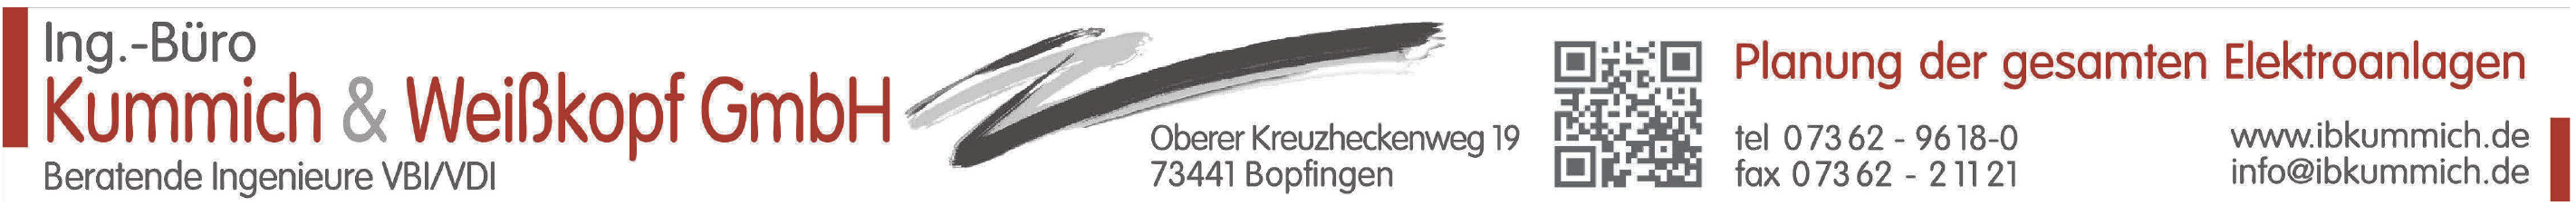 Ing.-Büro Kummich & Weißkopf GmbH